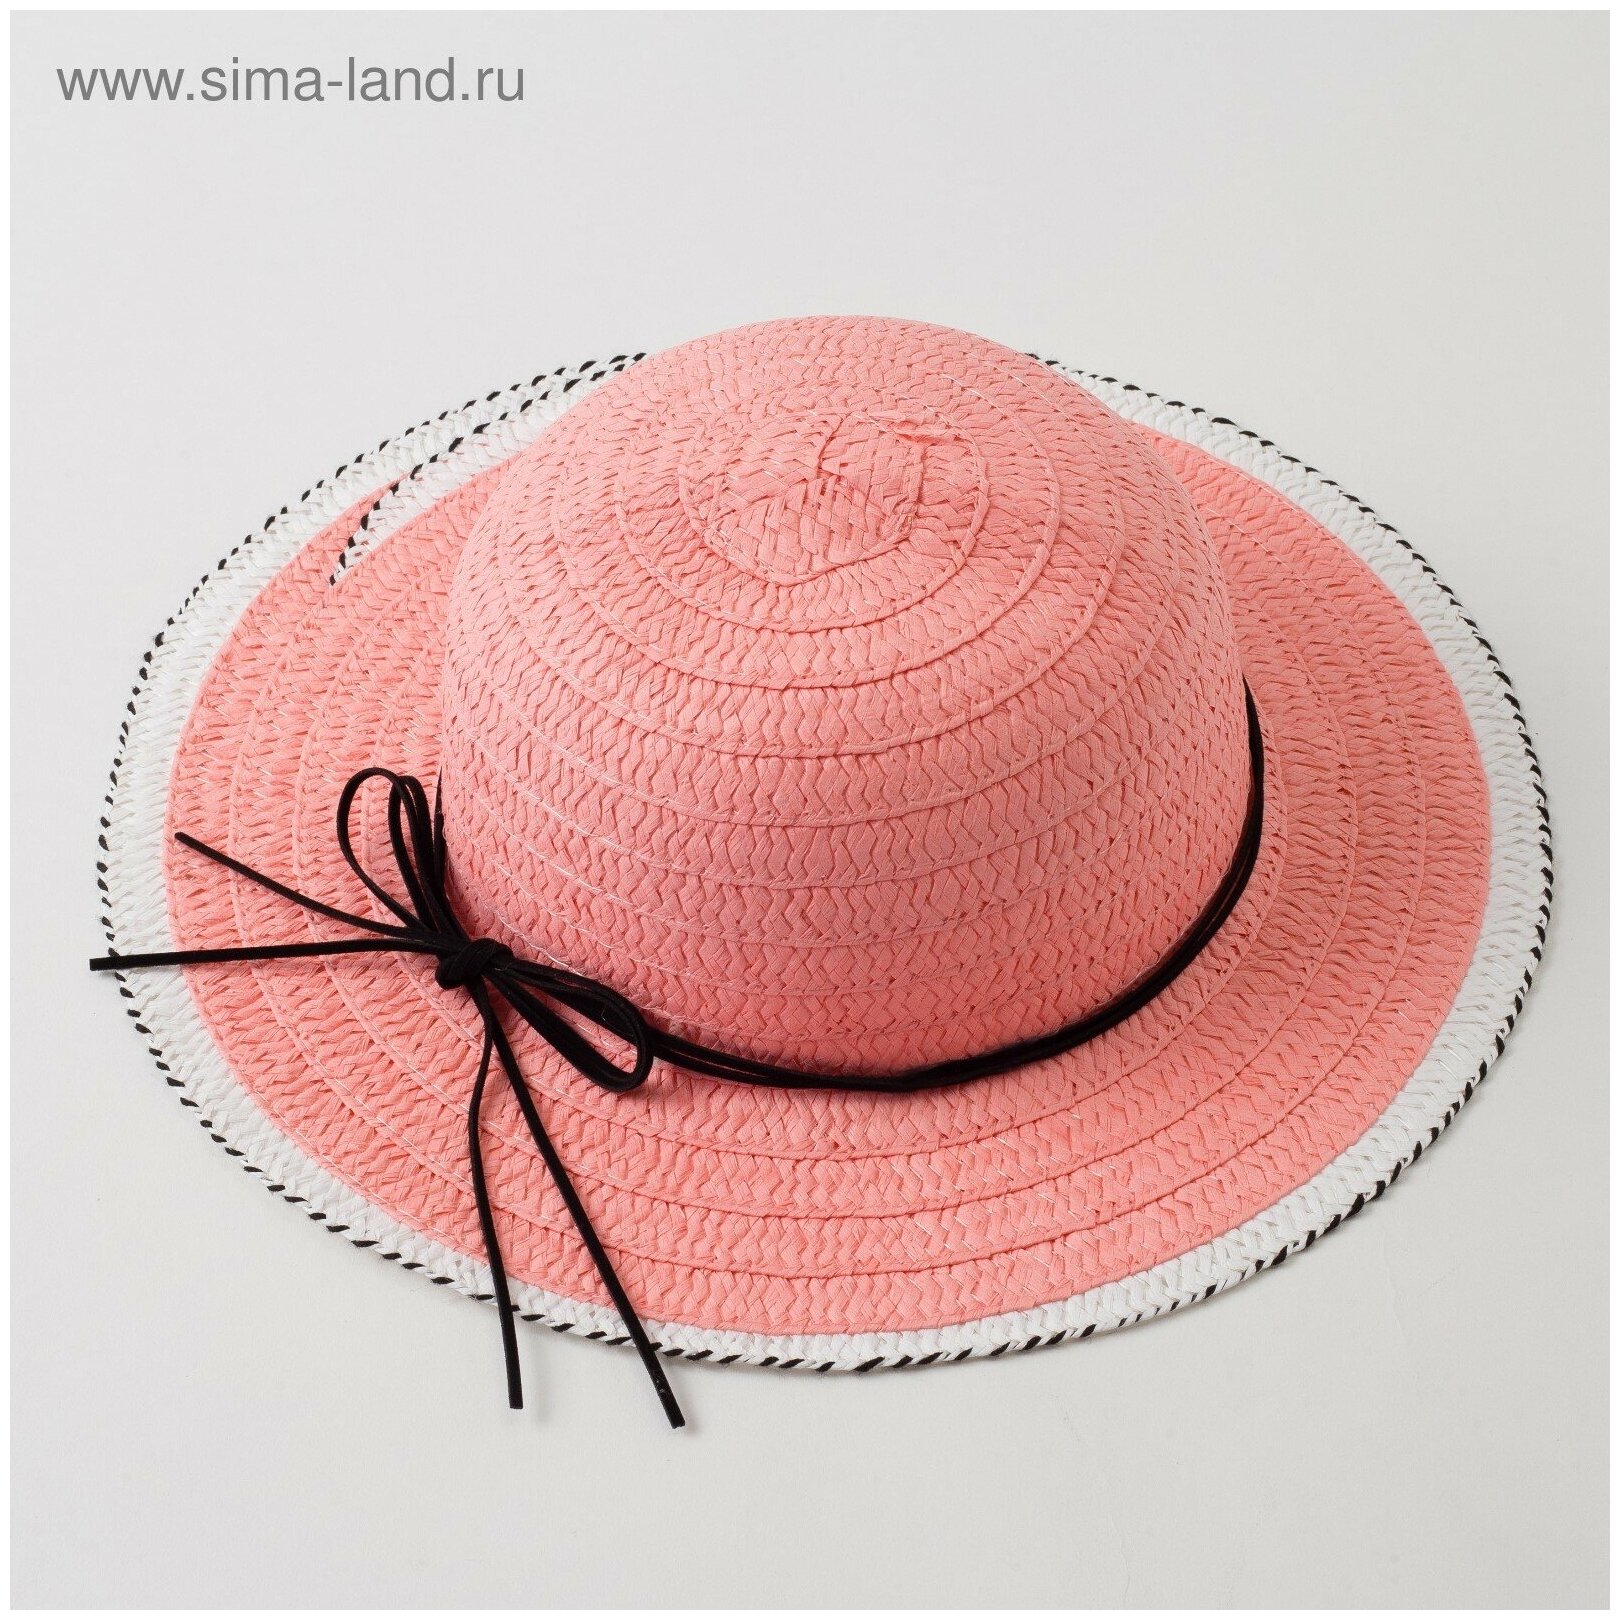 Шляпа для девочки "Куколка", размер 50, цвет розовый